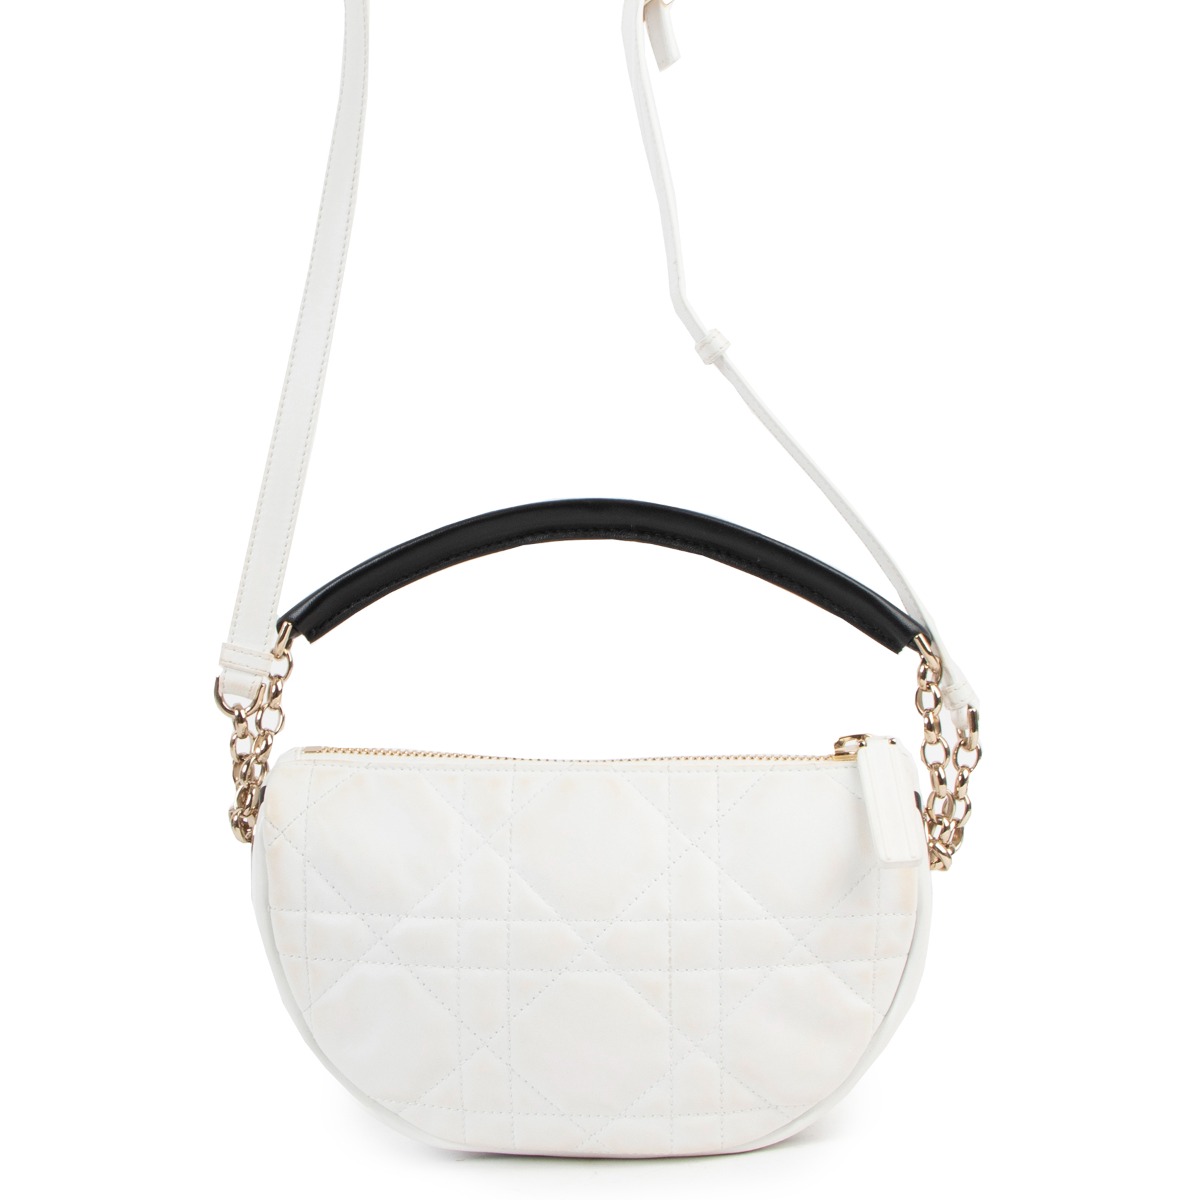 dior vibe handbag star of the spring summer 2022 collection